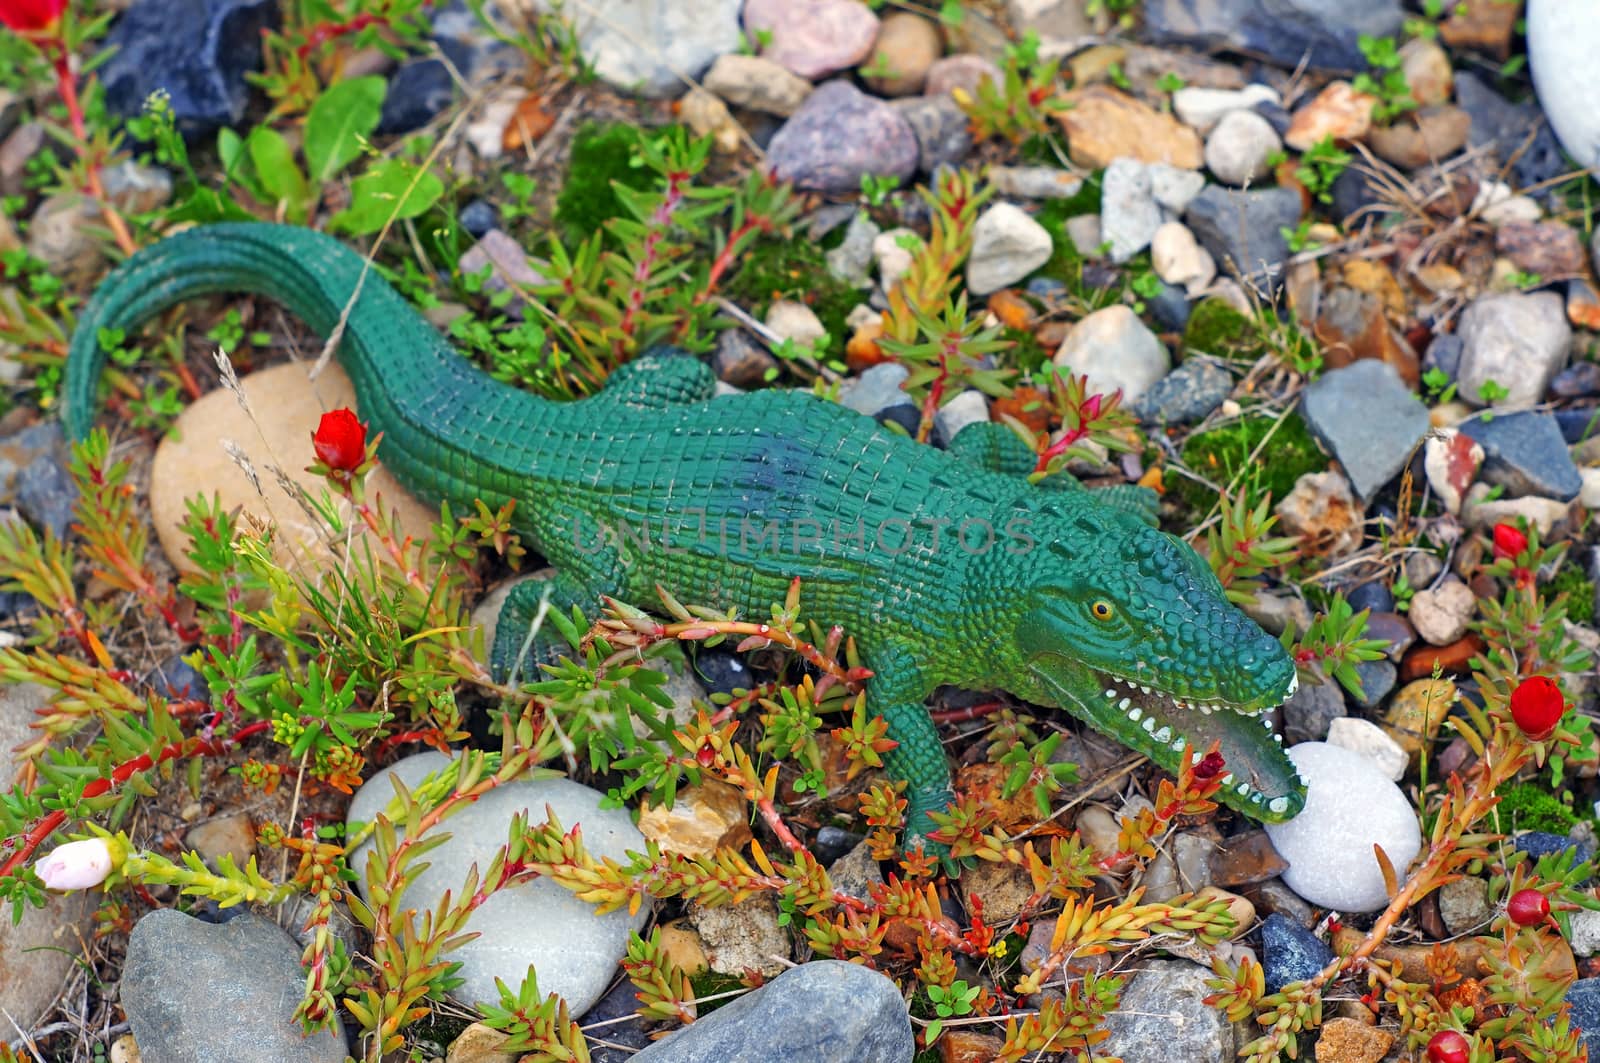 Plastic figure of a crocodile on the rock garden